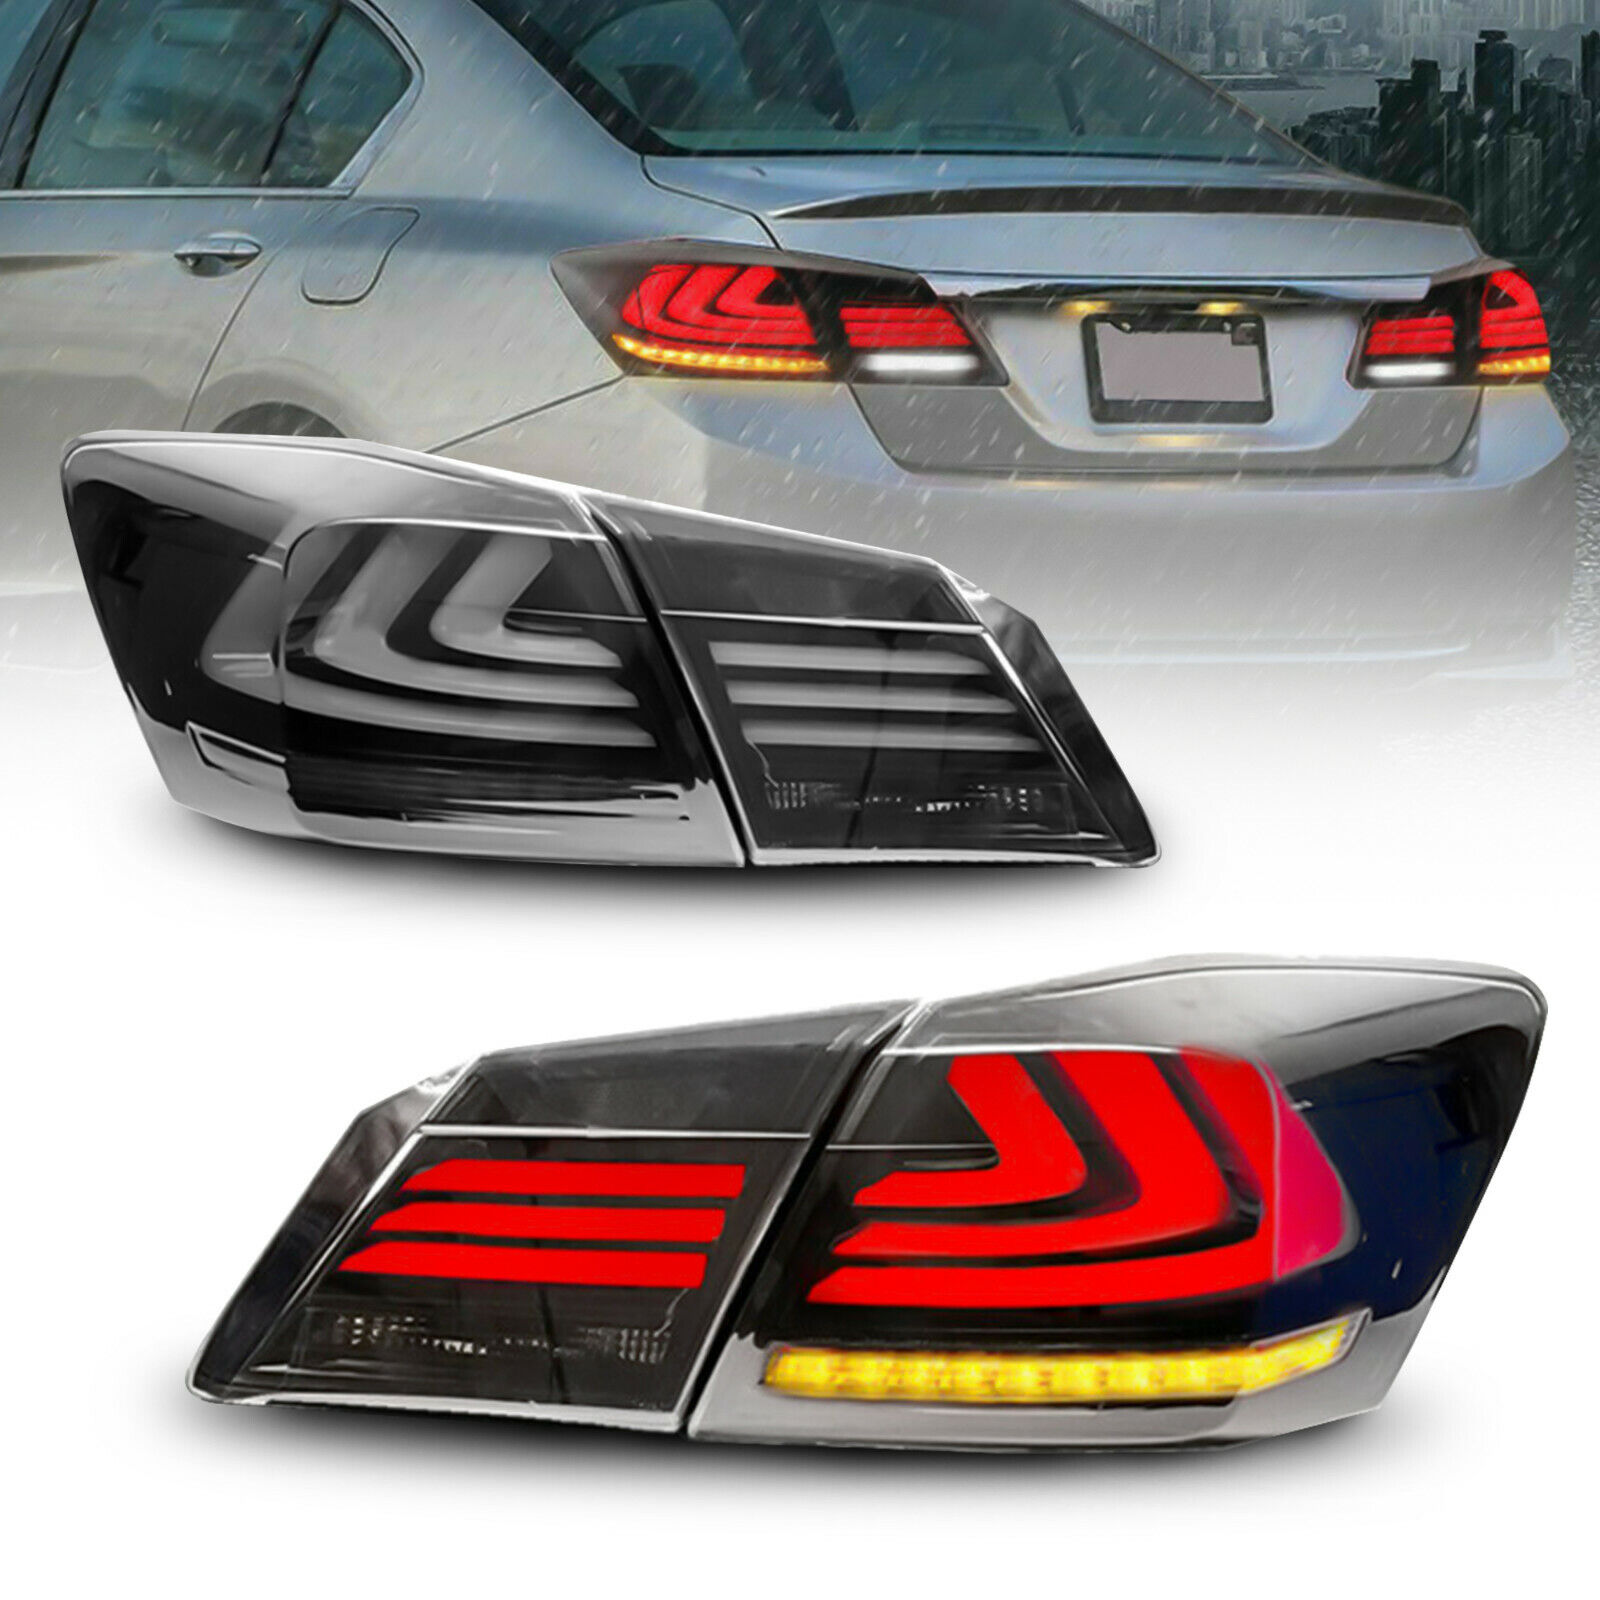 Set of 2 Smoke/Tinted LED Tail Lights Rear Brake Lamp For 2013-2015 Honda Accord